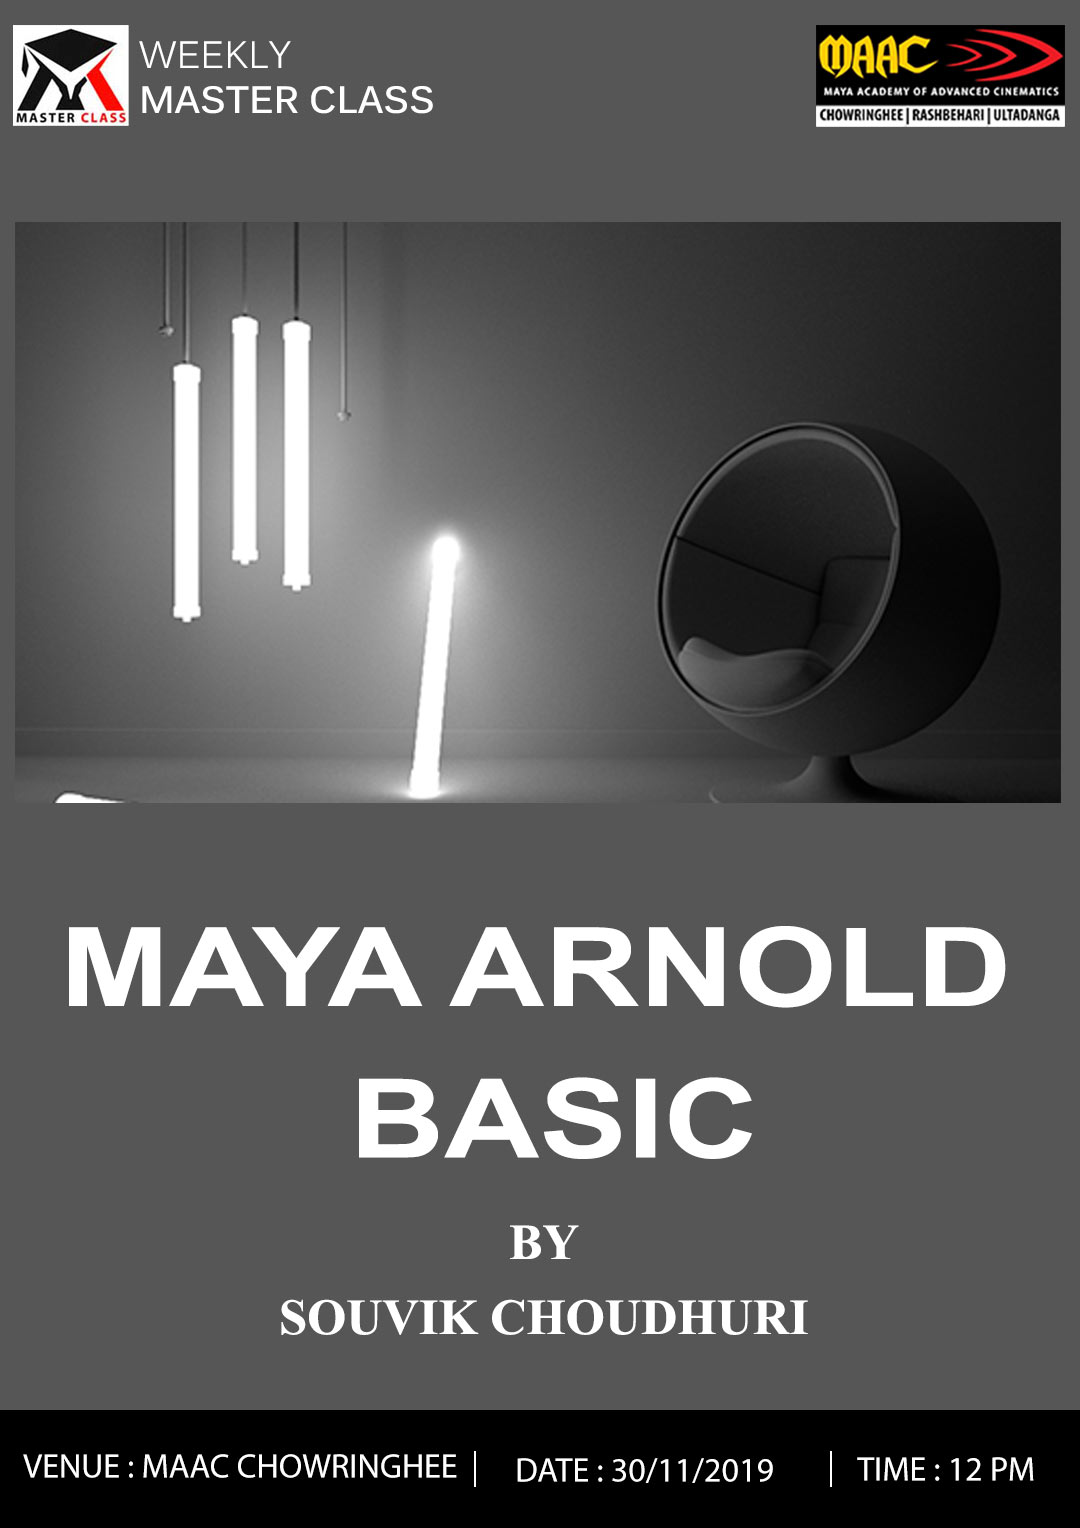 Weekly Master Class on Maya Arnold Basic